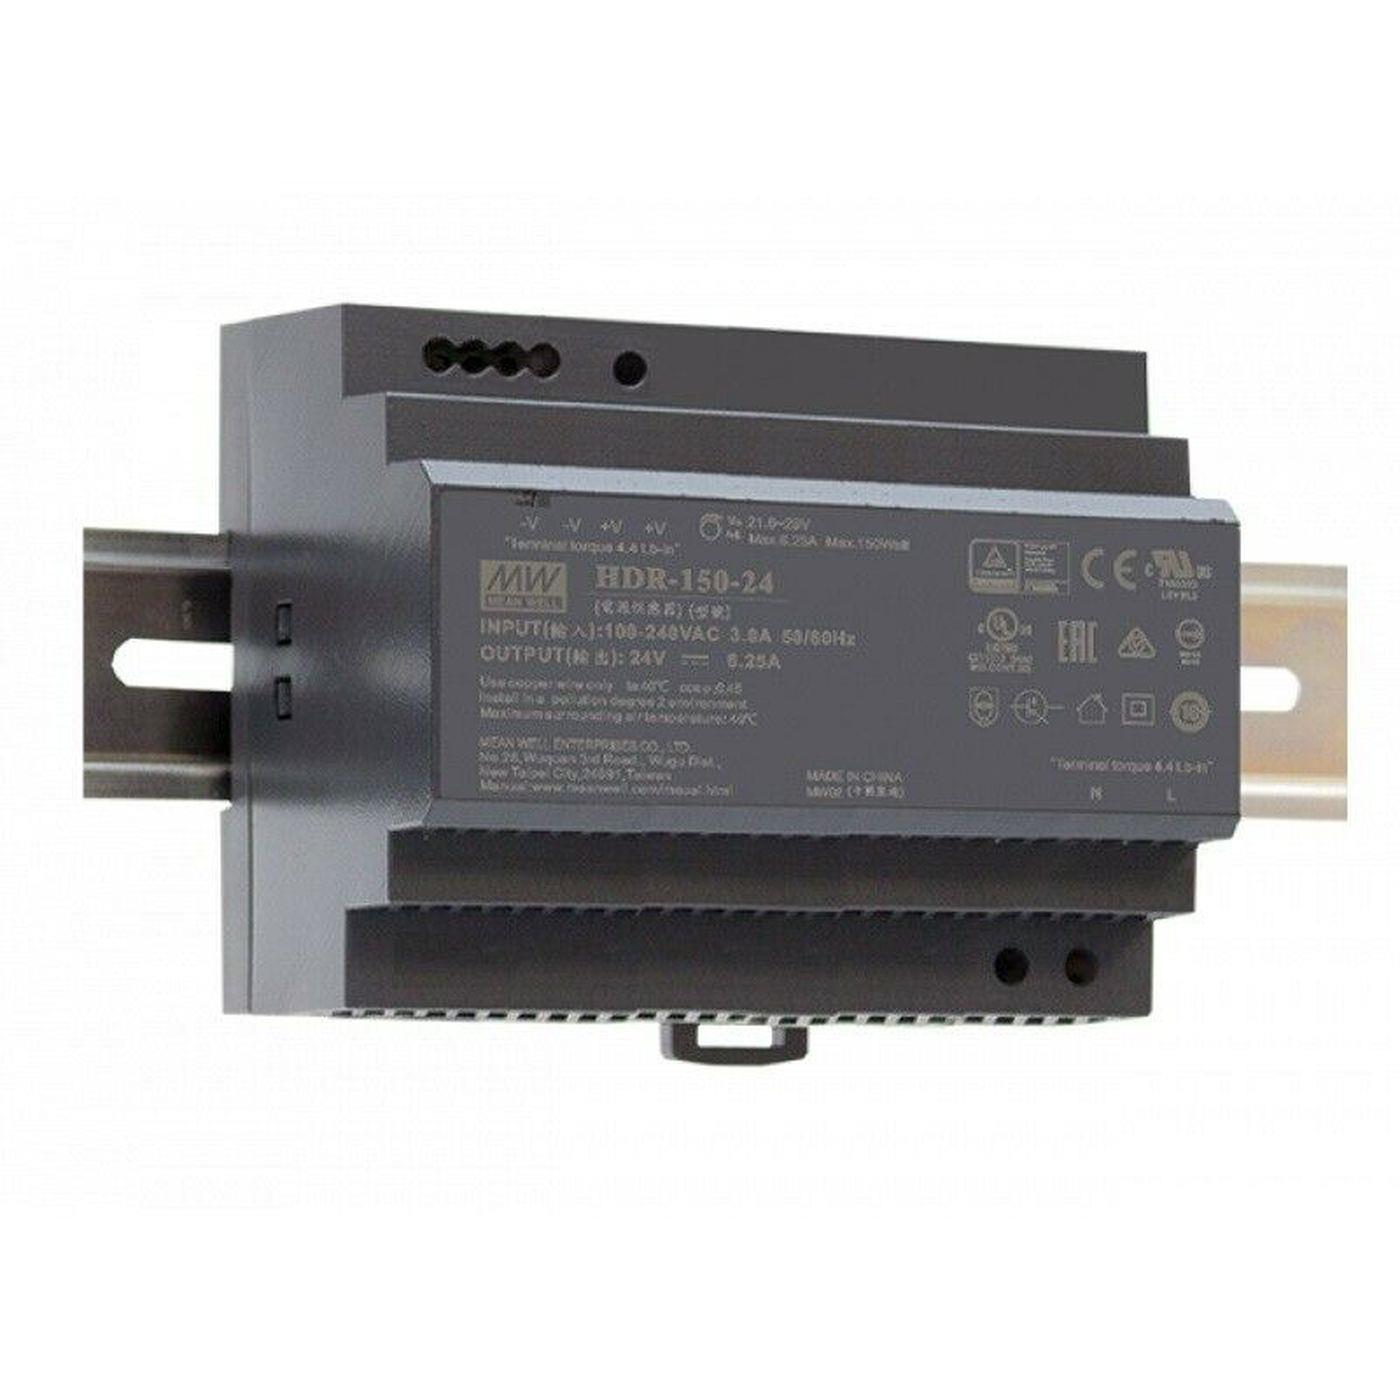 HDR-150-48 153,6W 48V 3,2A Din Rail power supply